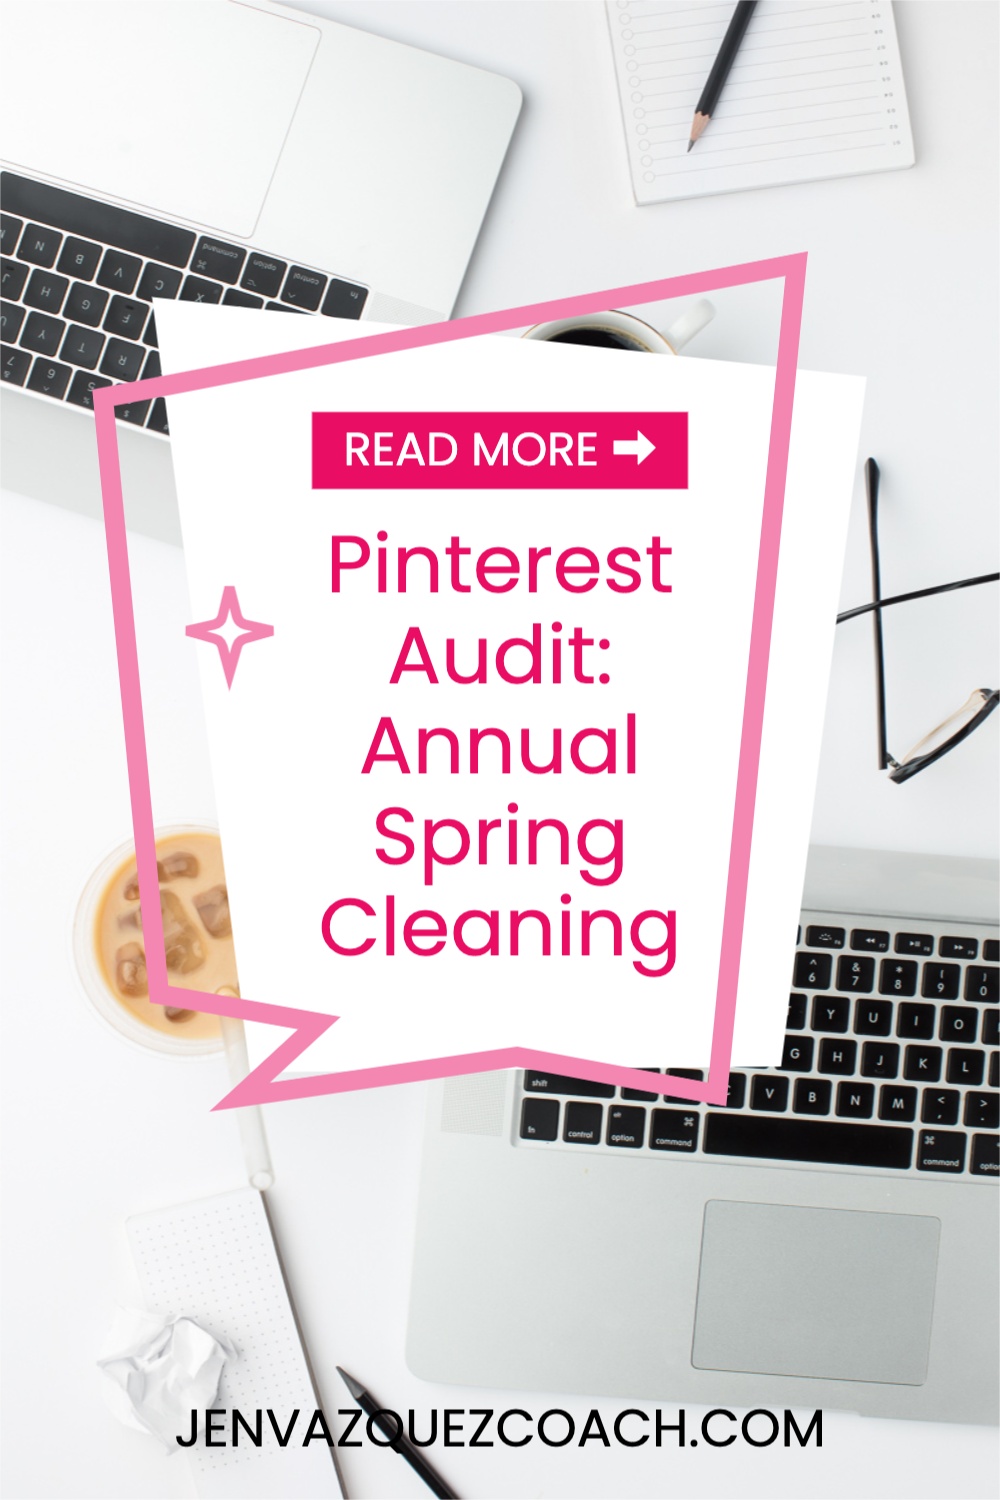 Spring Clean your Pinterest Profile - by Jen Vazquez Pinterest Marketing Strategist